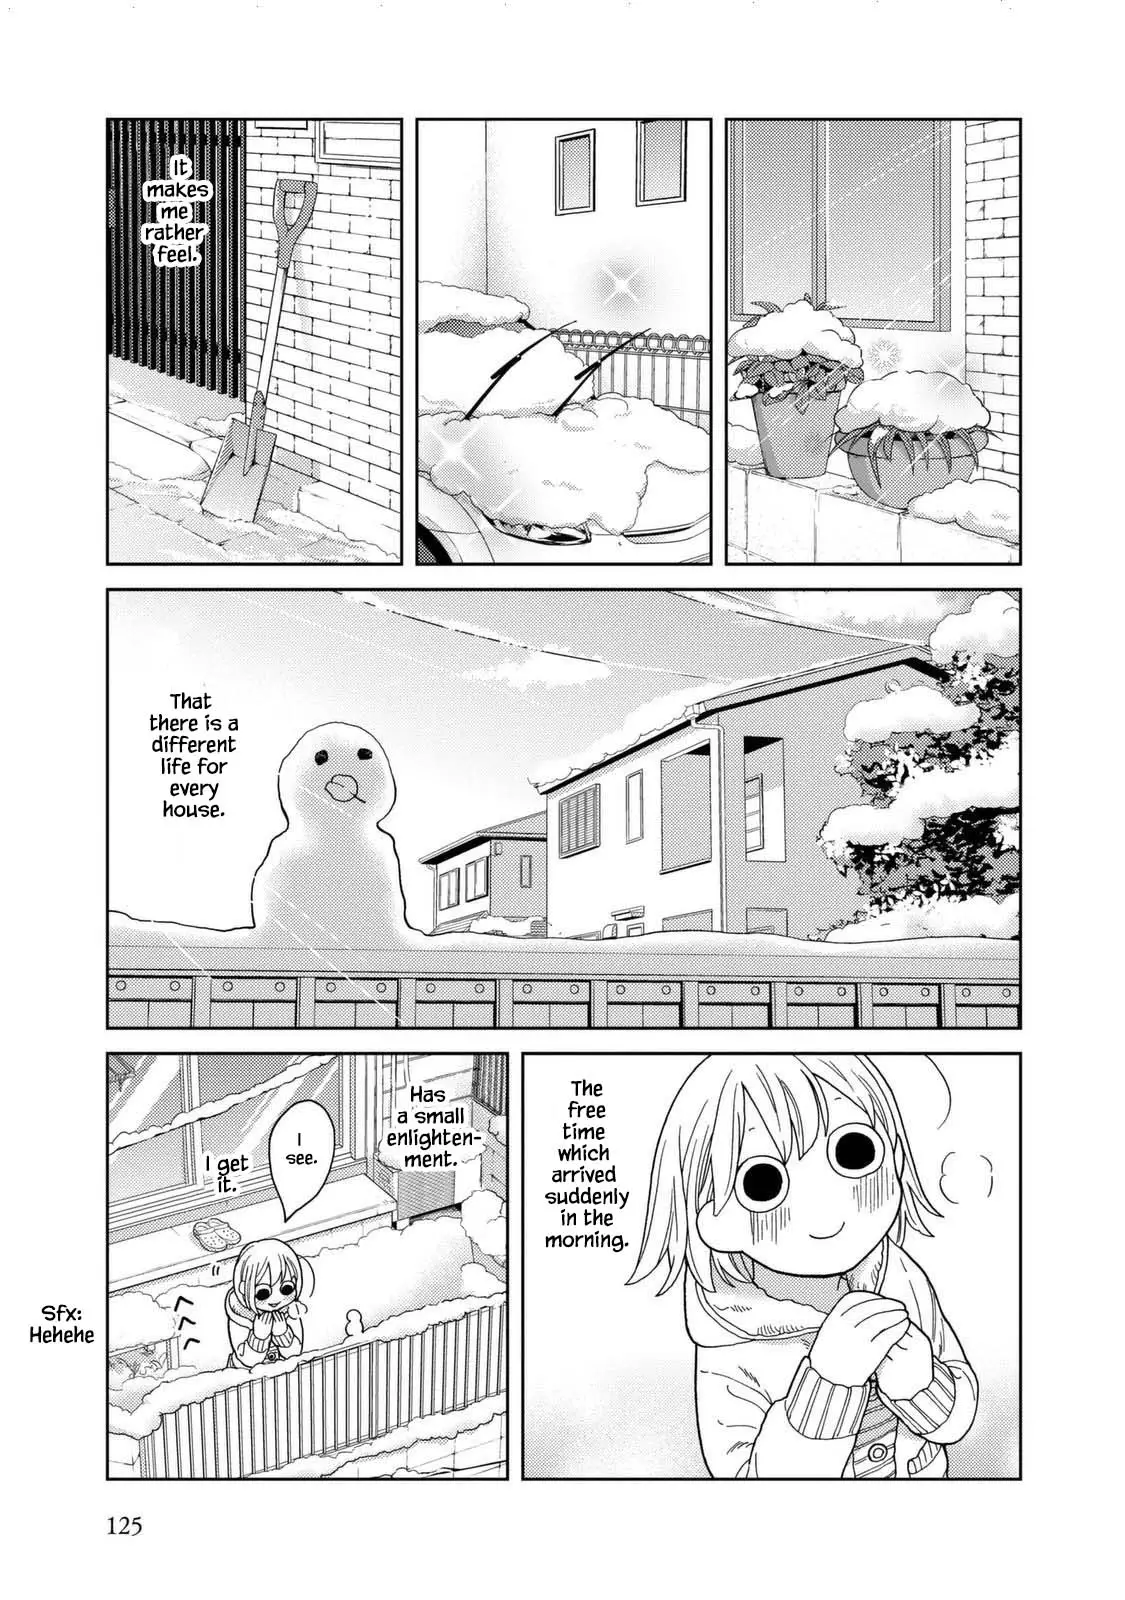 Takako-San - 39 page 5-2685dfbd